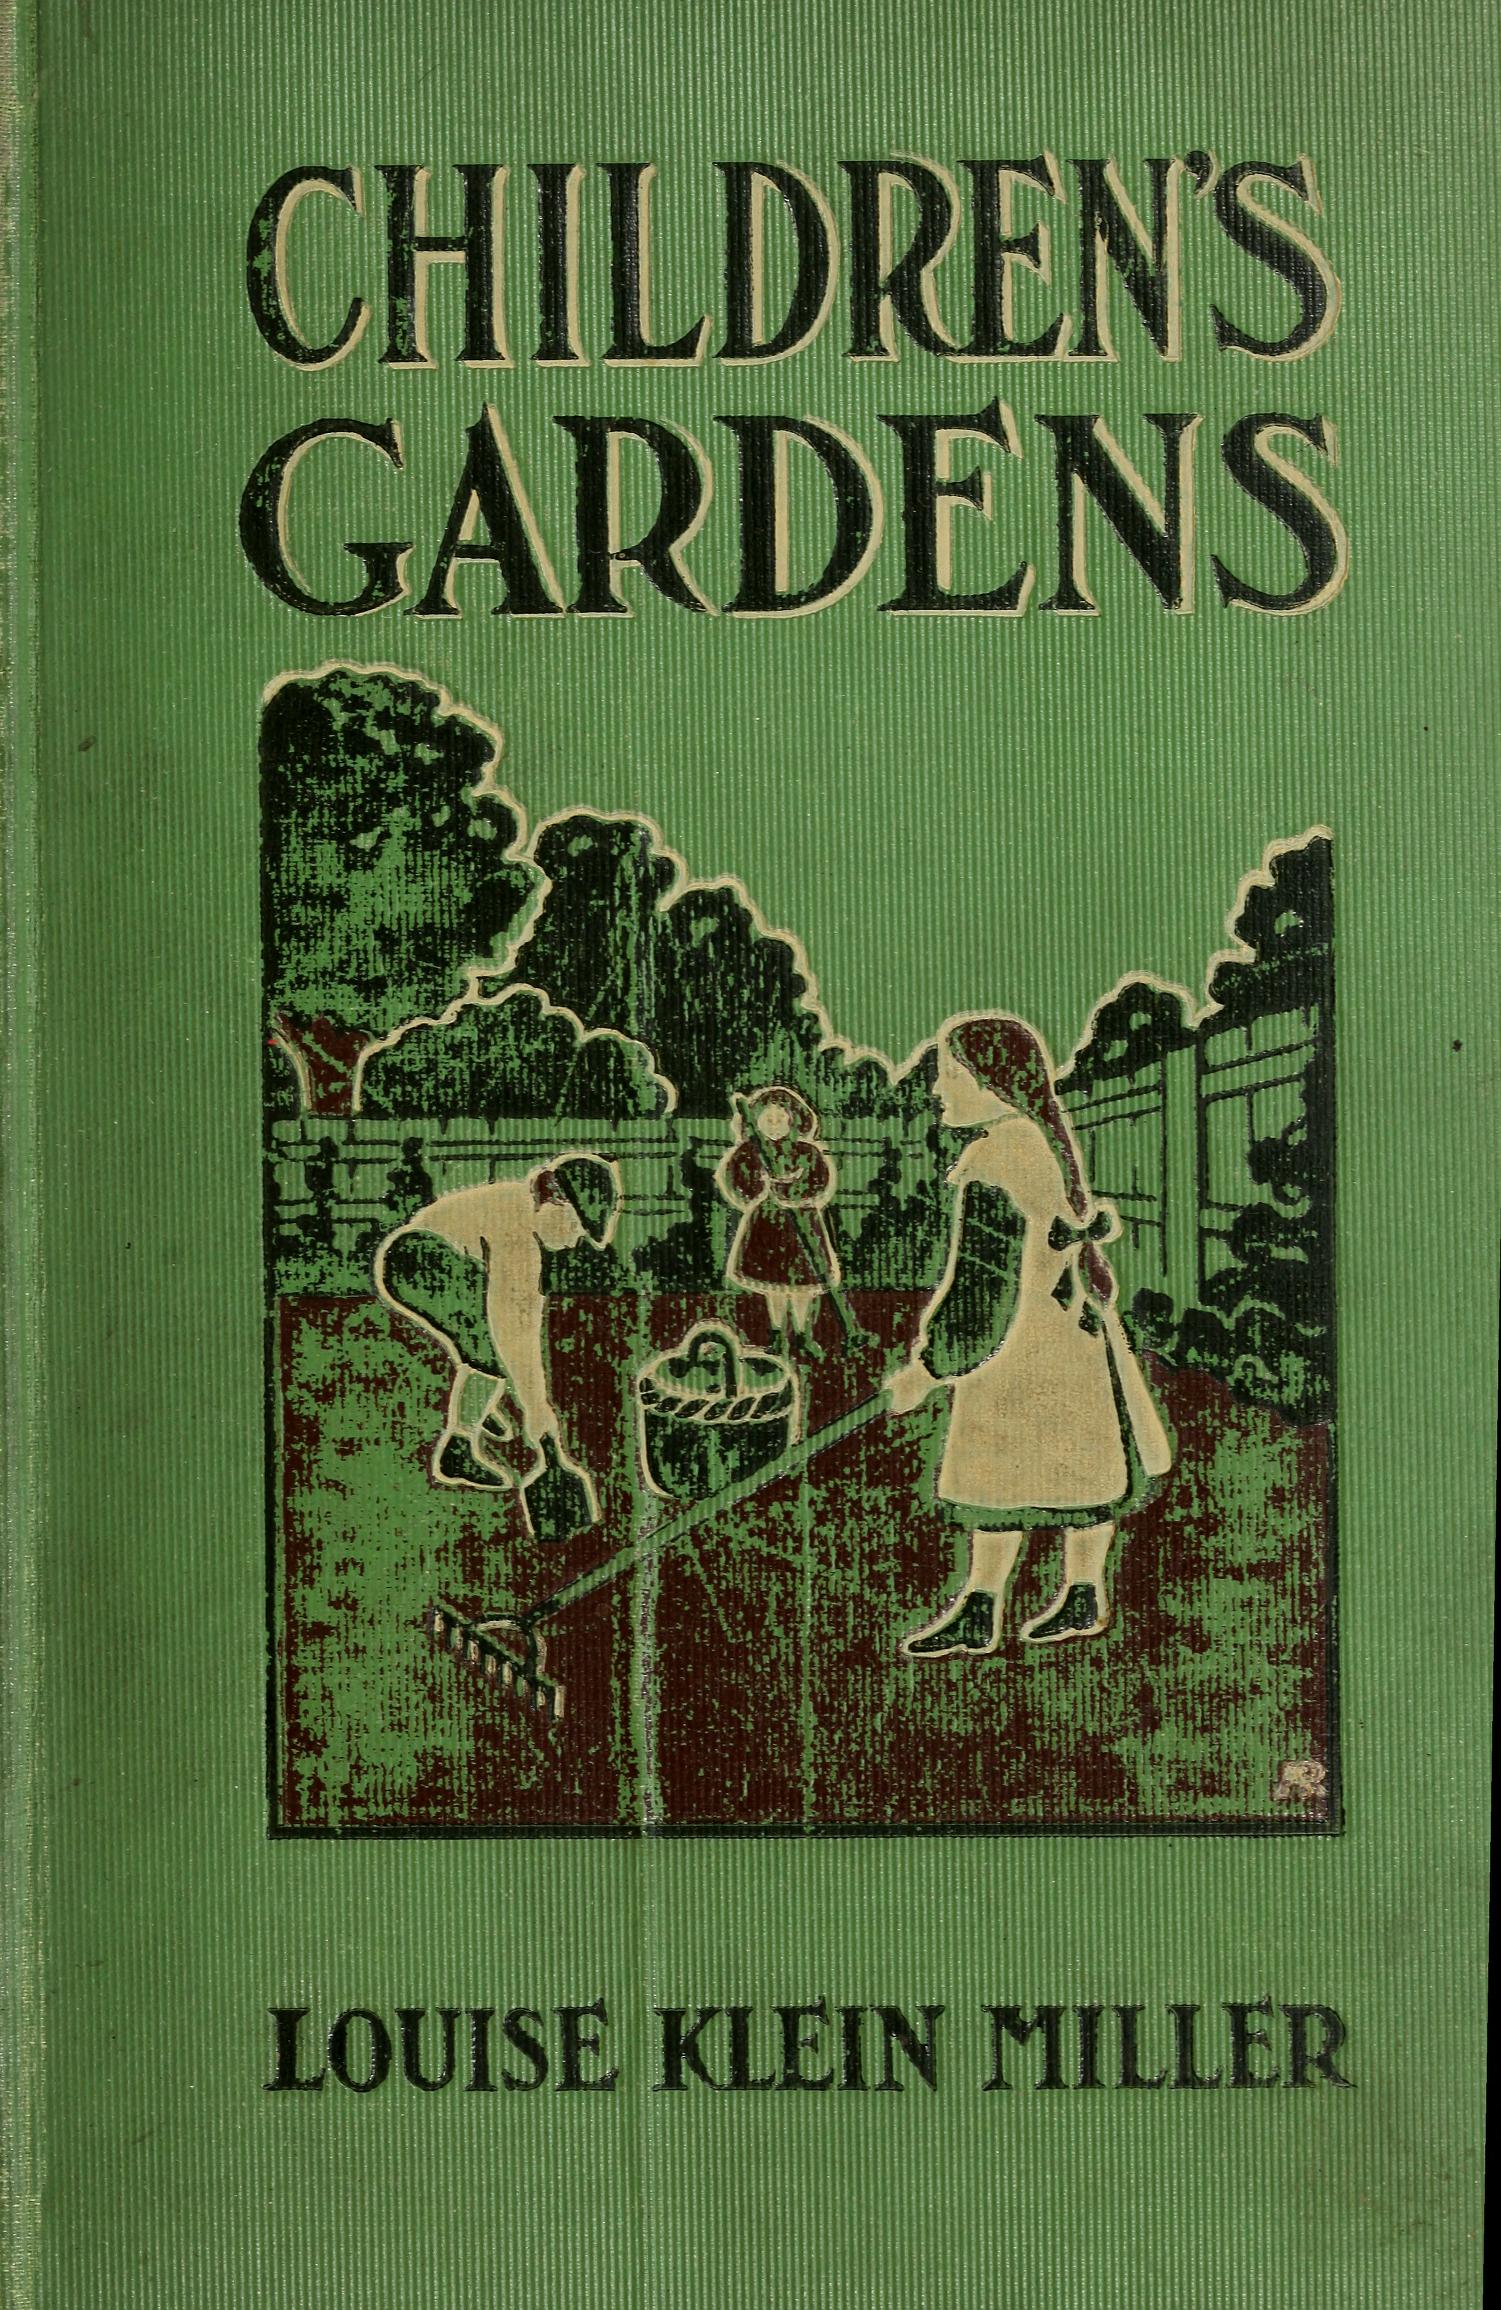 teacher and students in garden